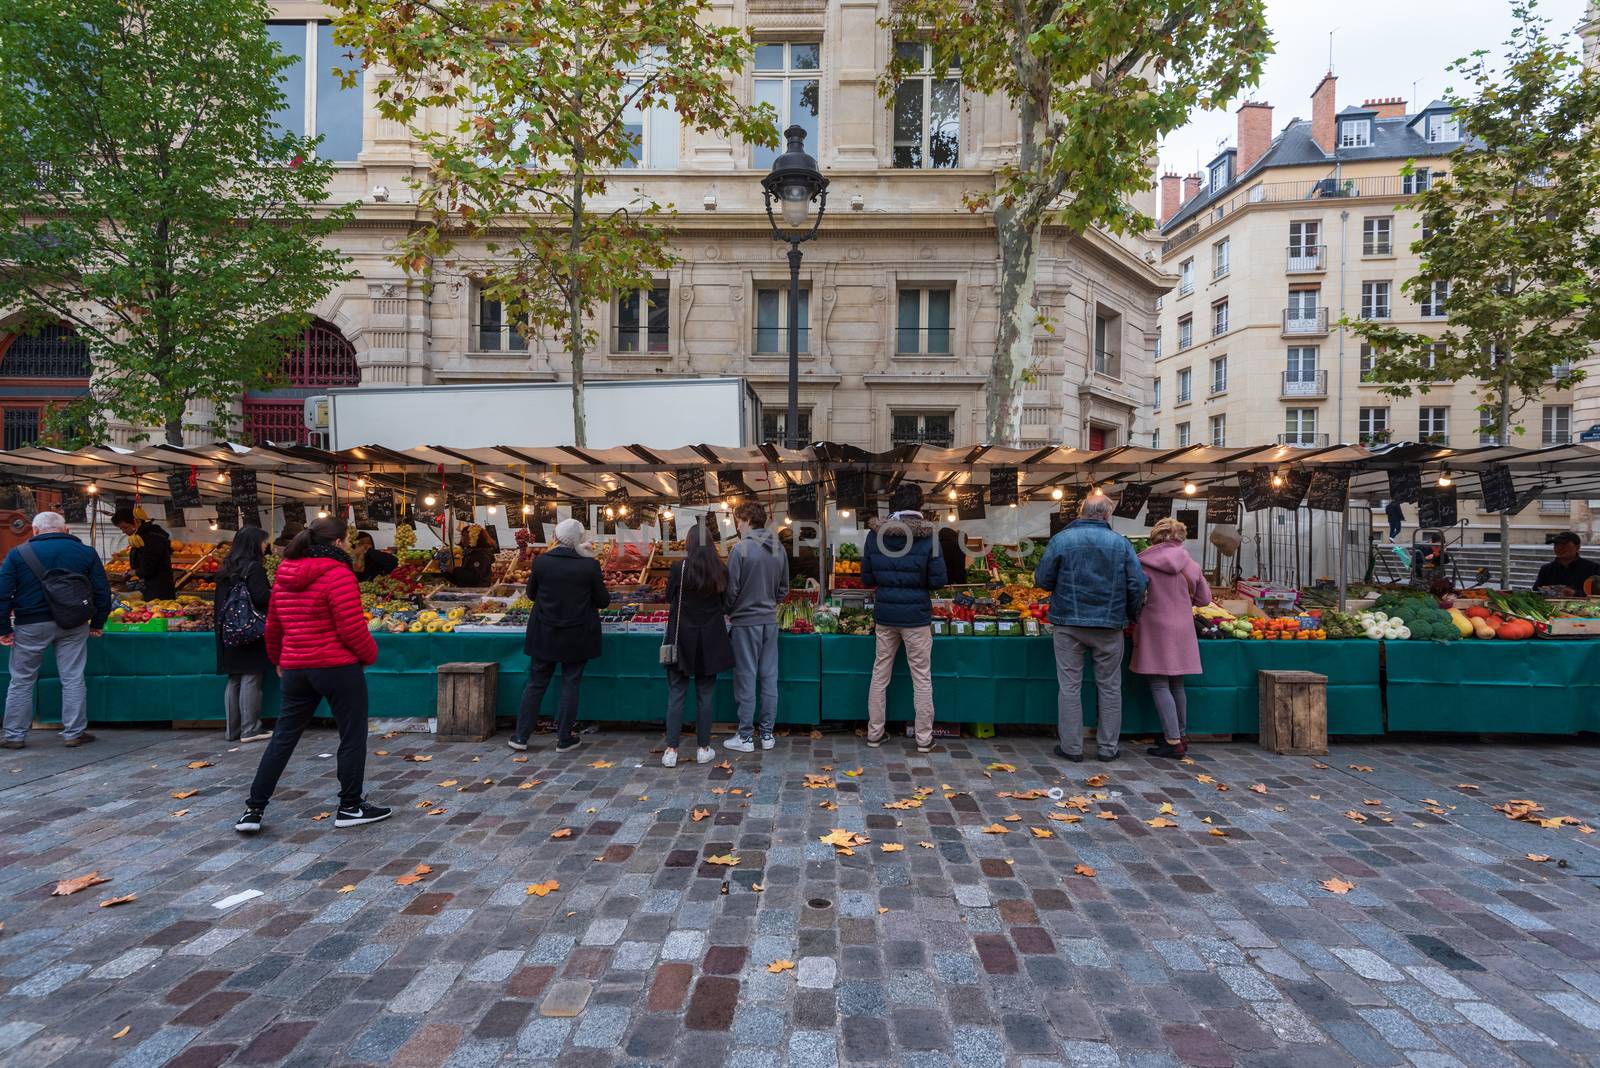 Parisians Shop in a Farmers Market by jfbenning